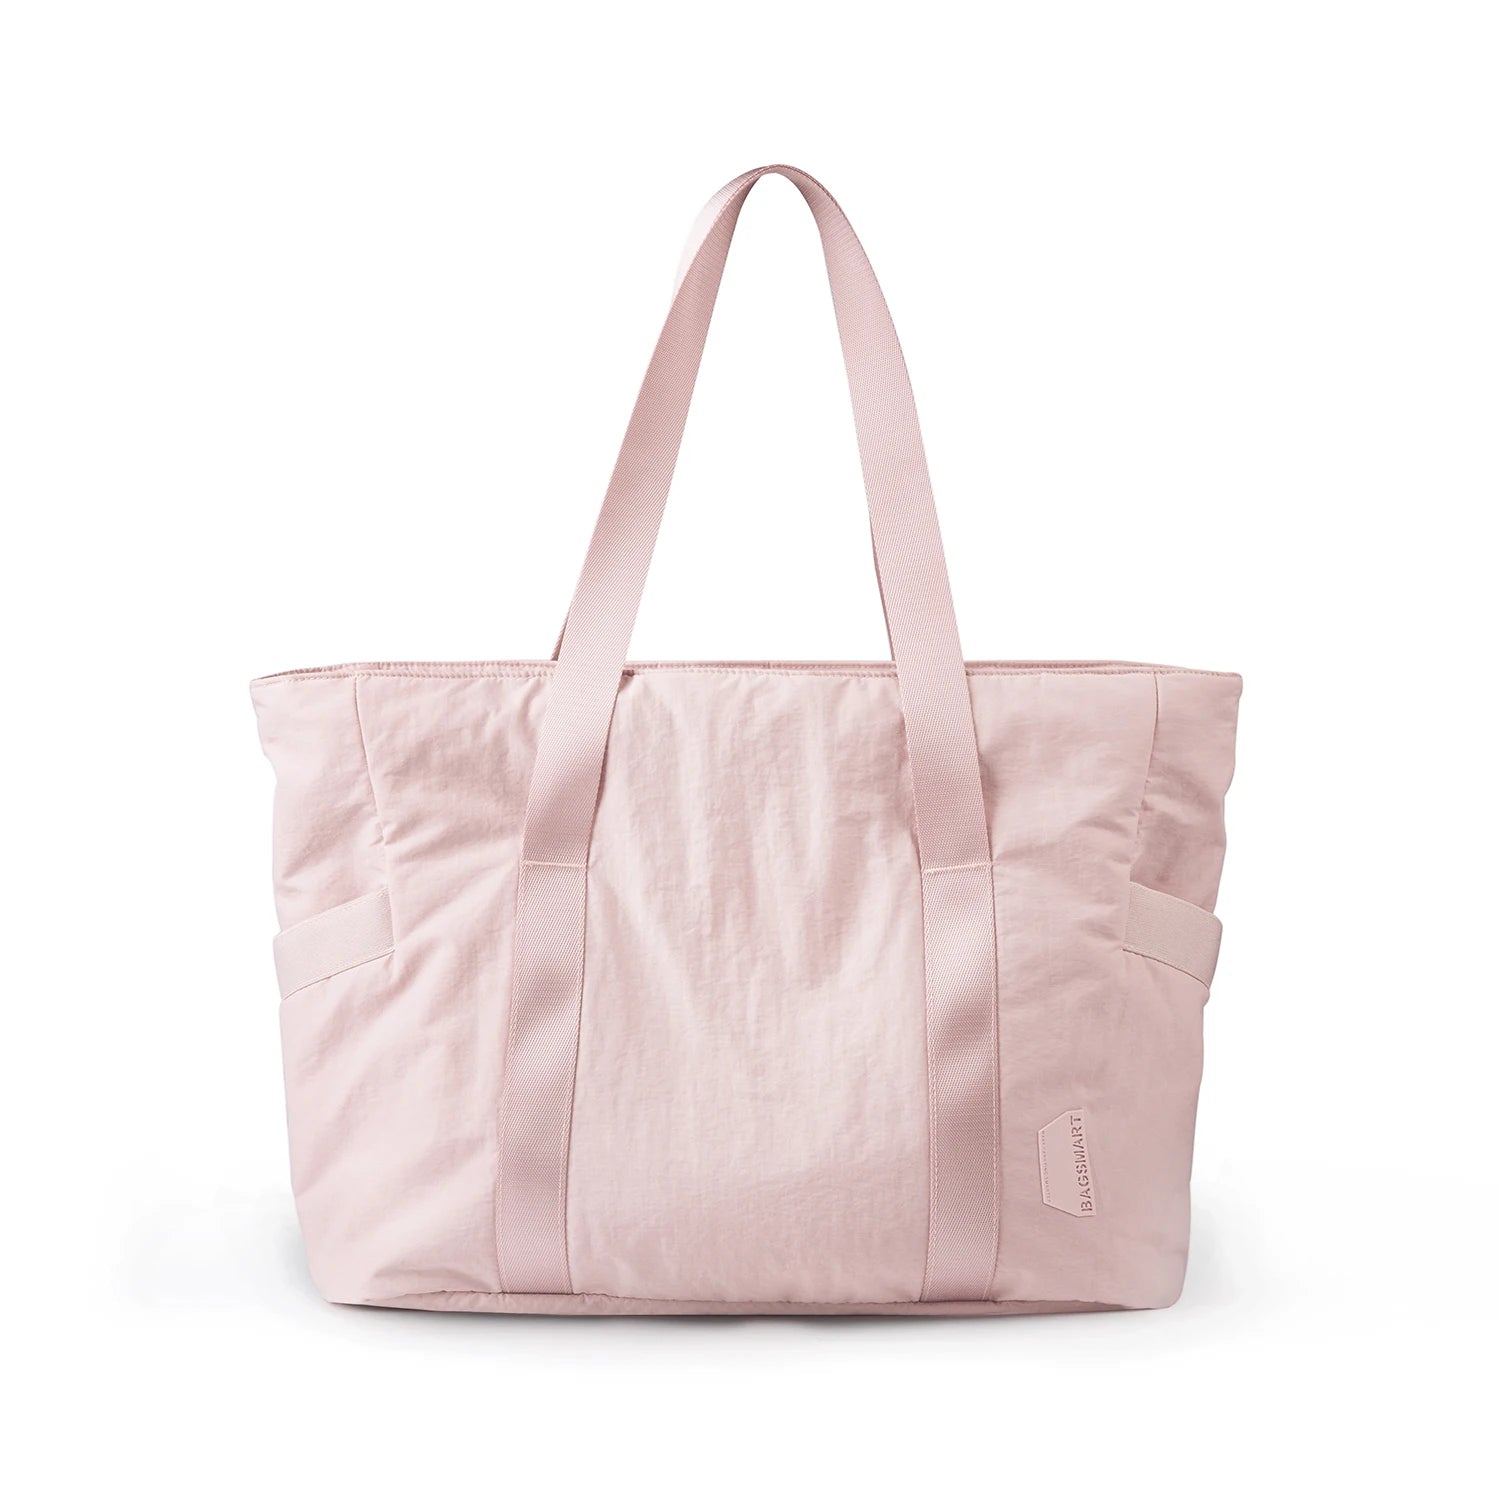 Large Capacity Women's Tote Bag pink M / CHINA